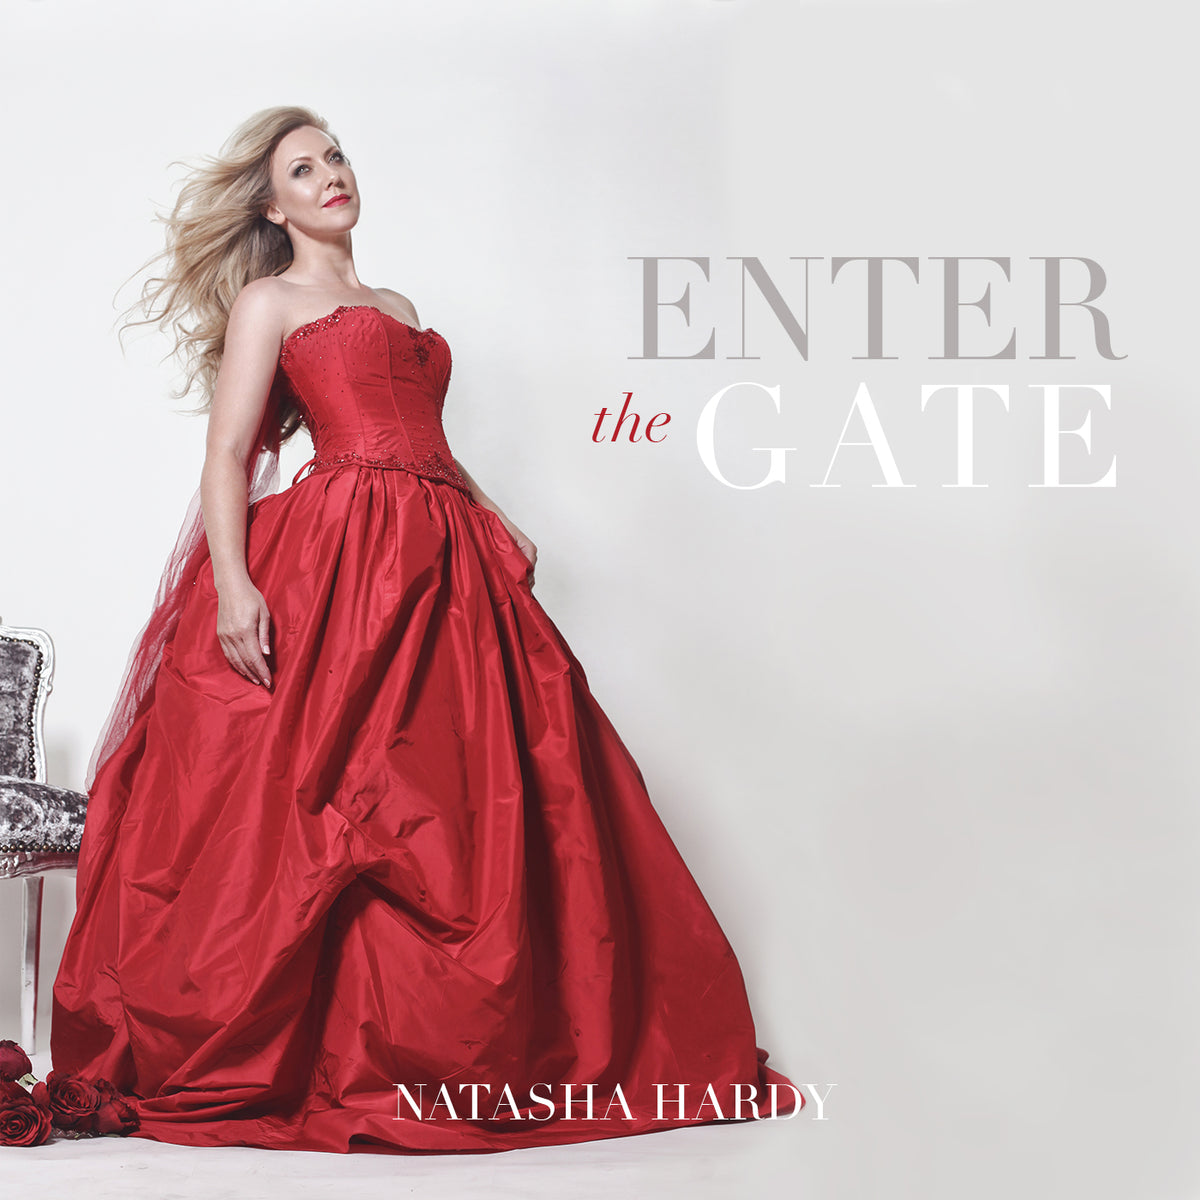 Enter The Gate Digital Single